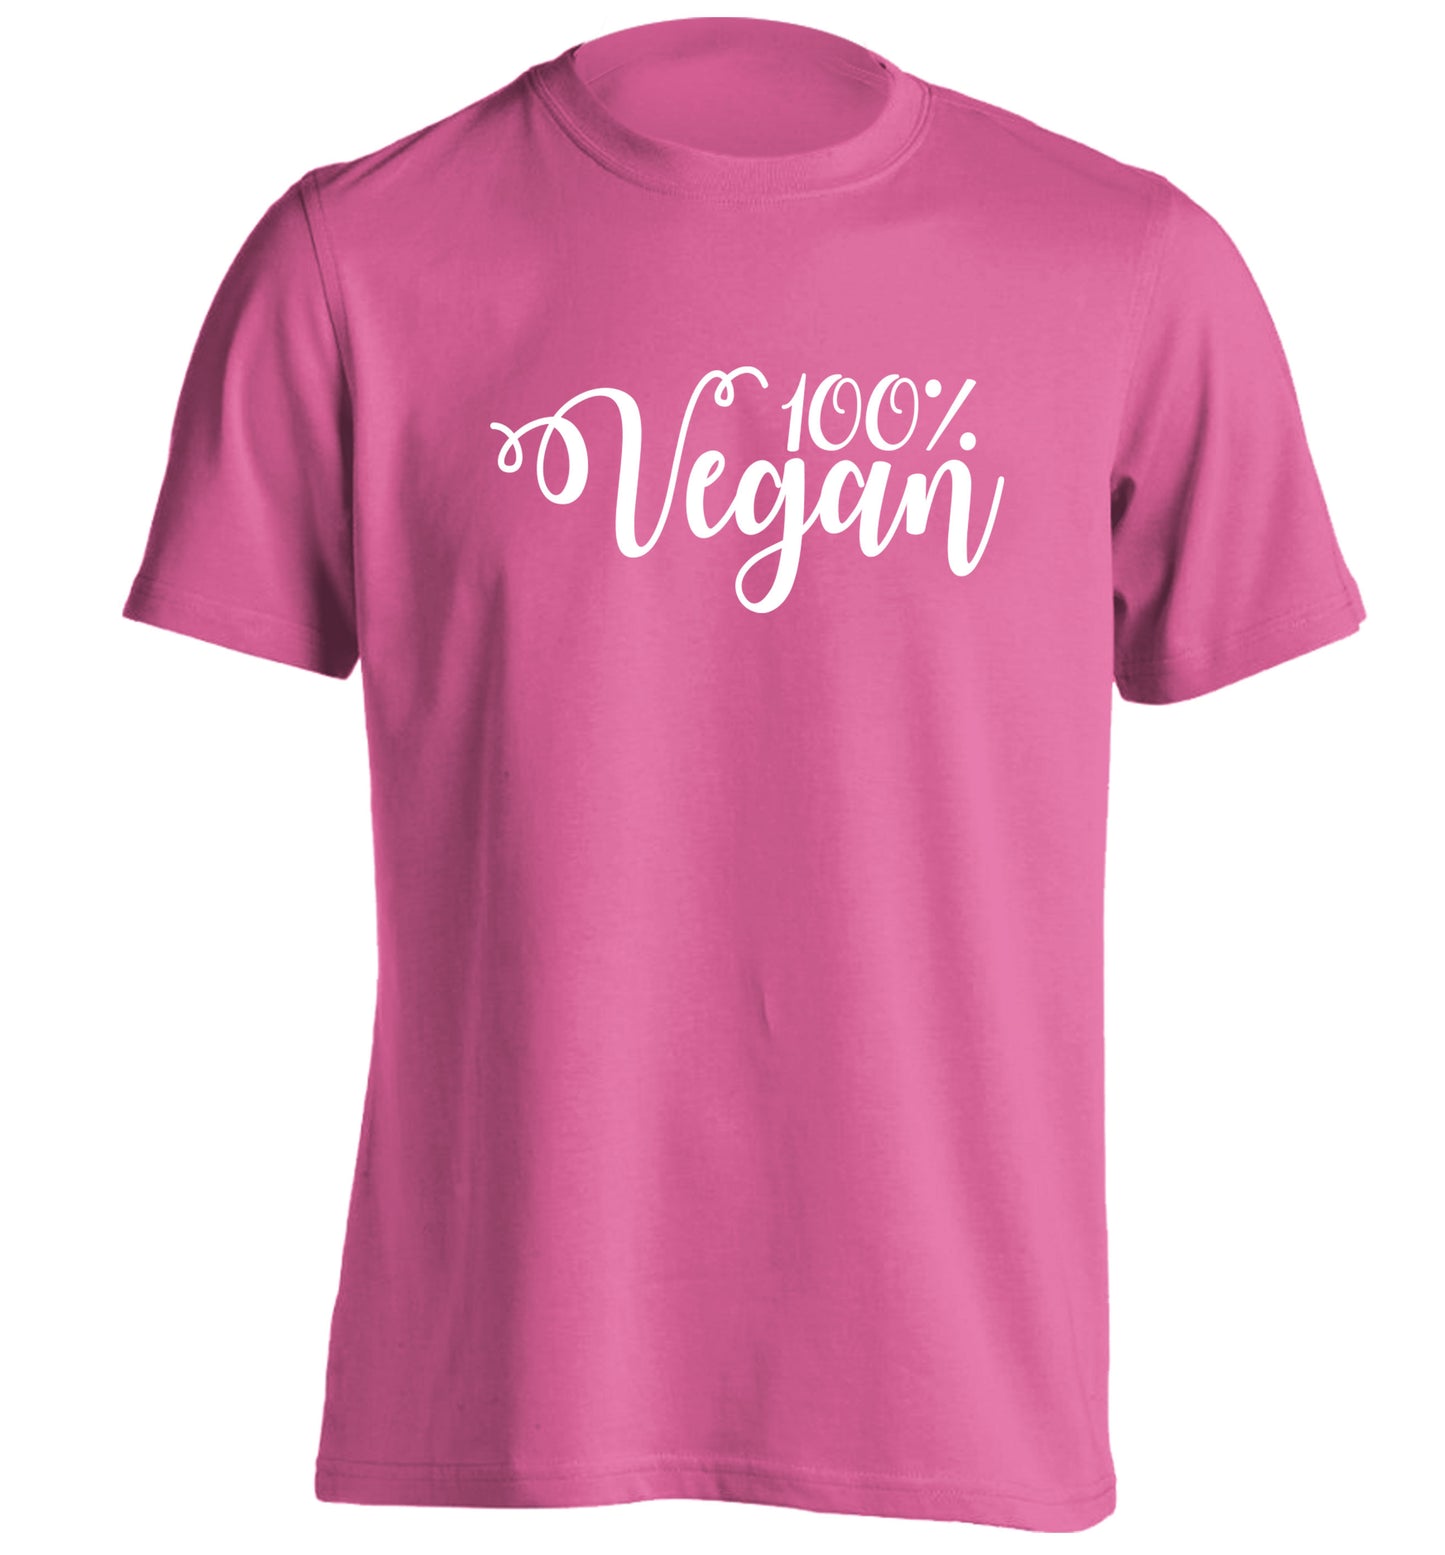 100% Vegan adults unisex pink Tshirt 2XL